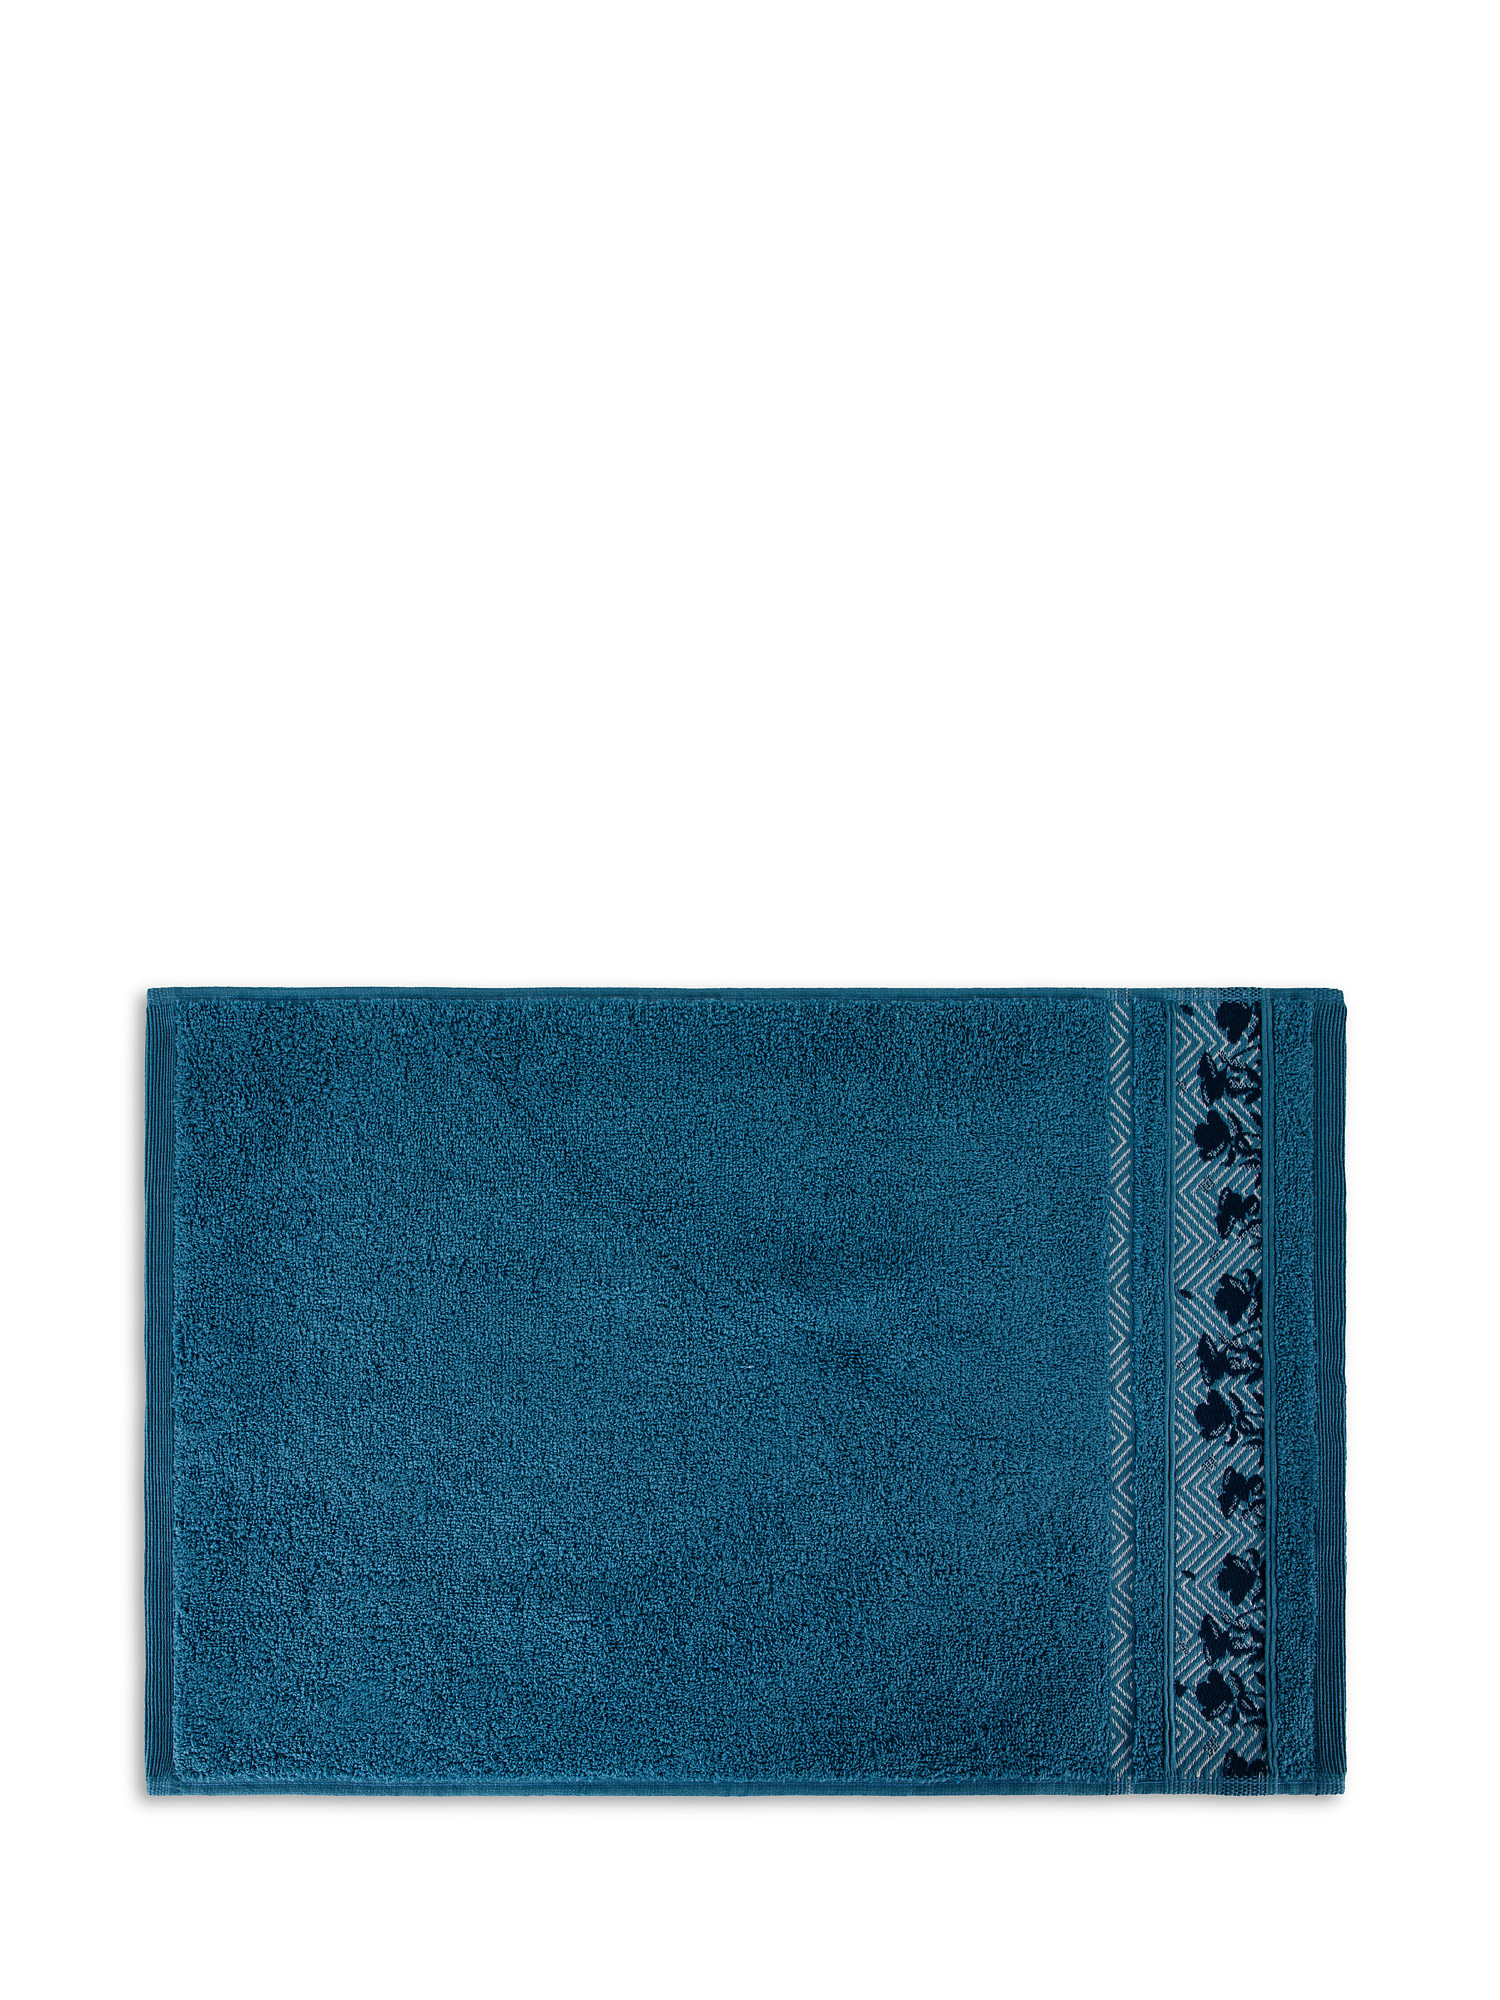 Set 2 asciugamani spugna di cotone bordo floreale, Blu, large image number 1